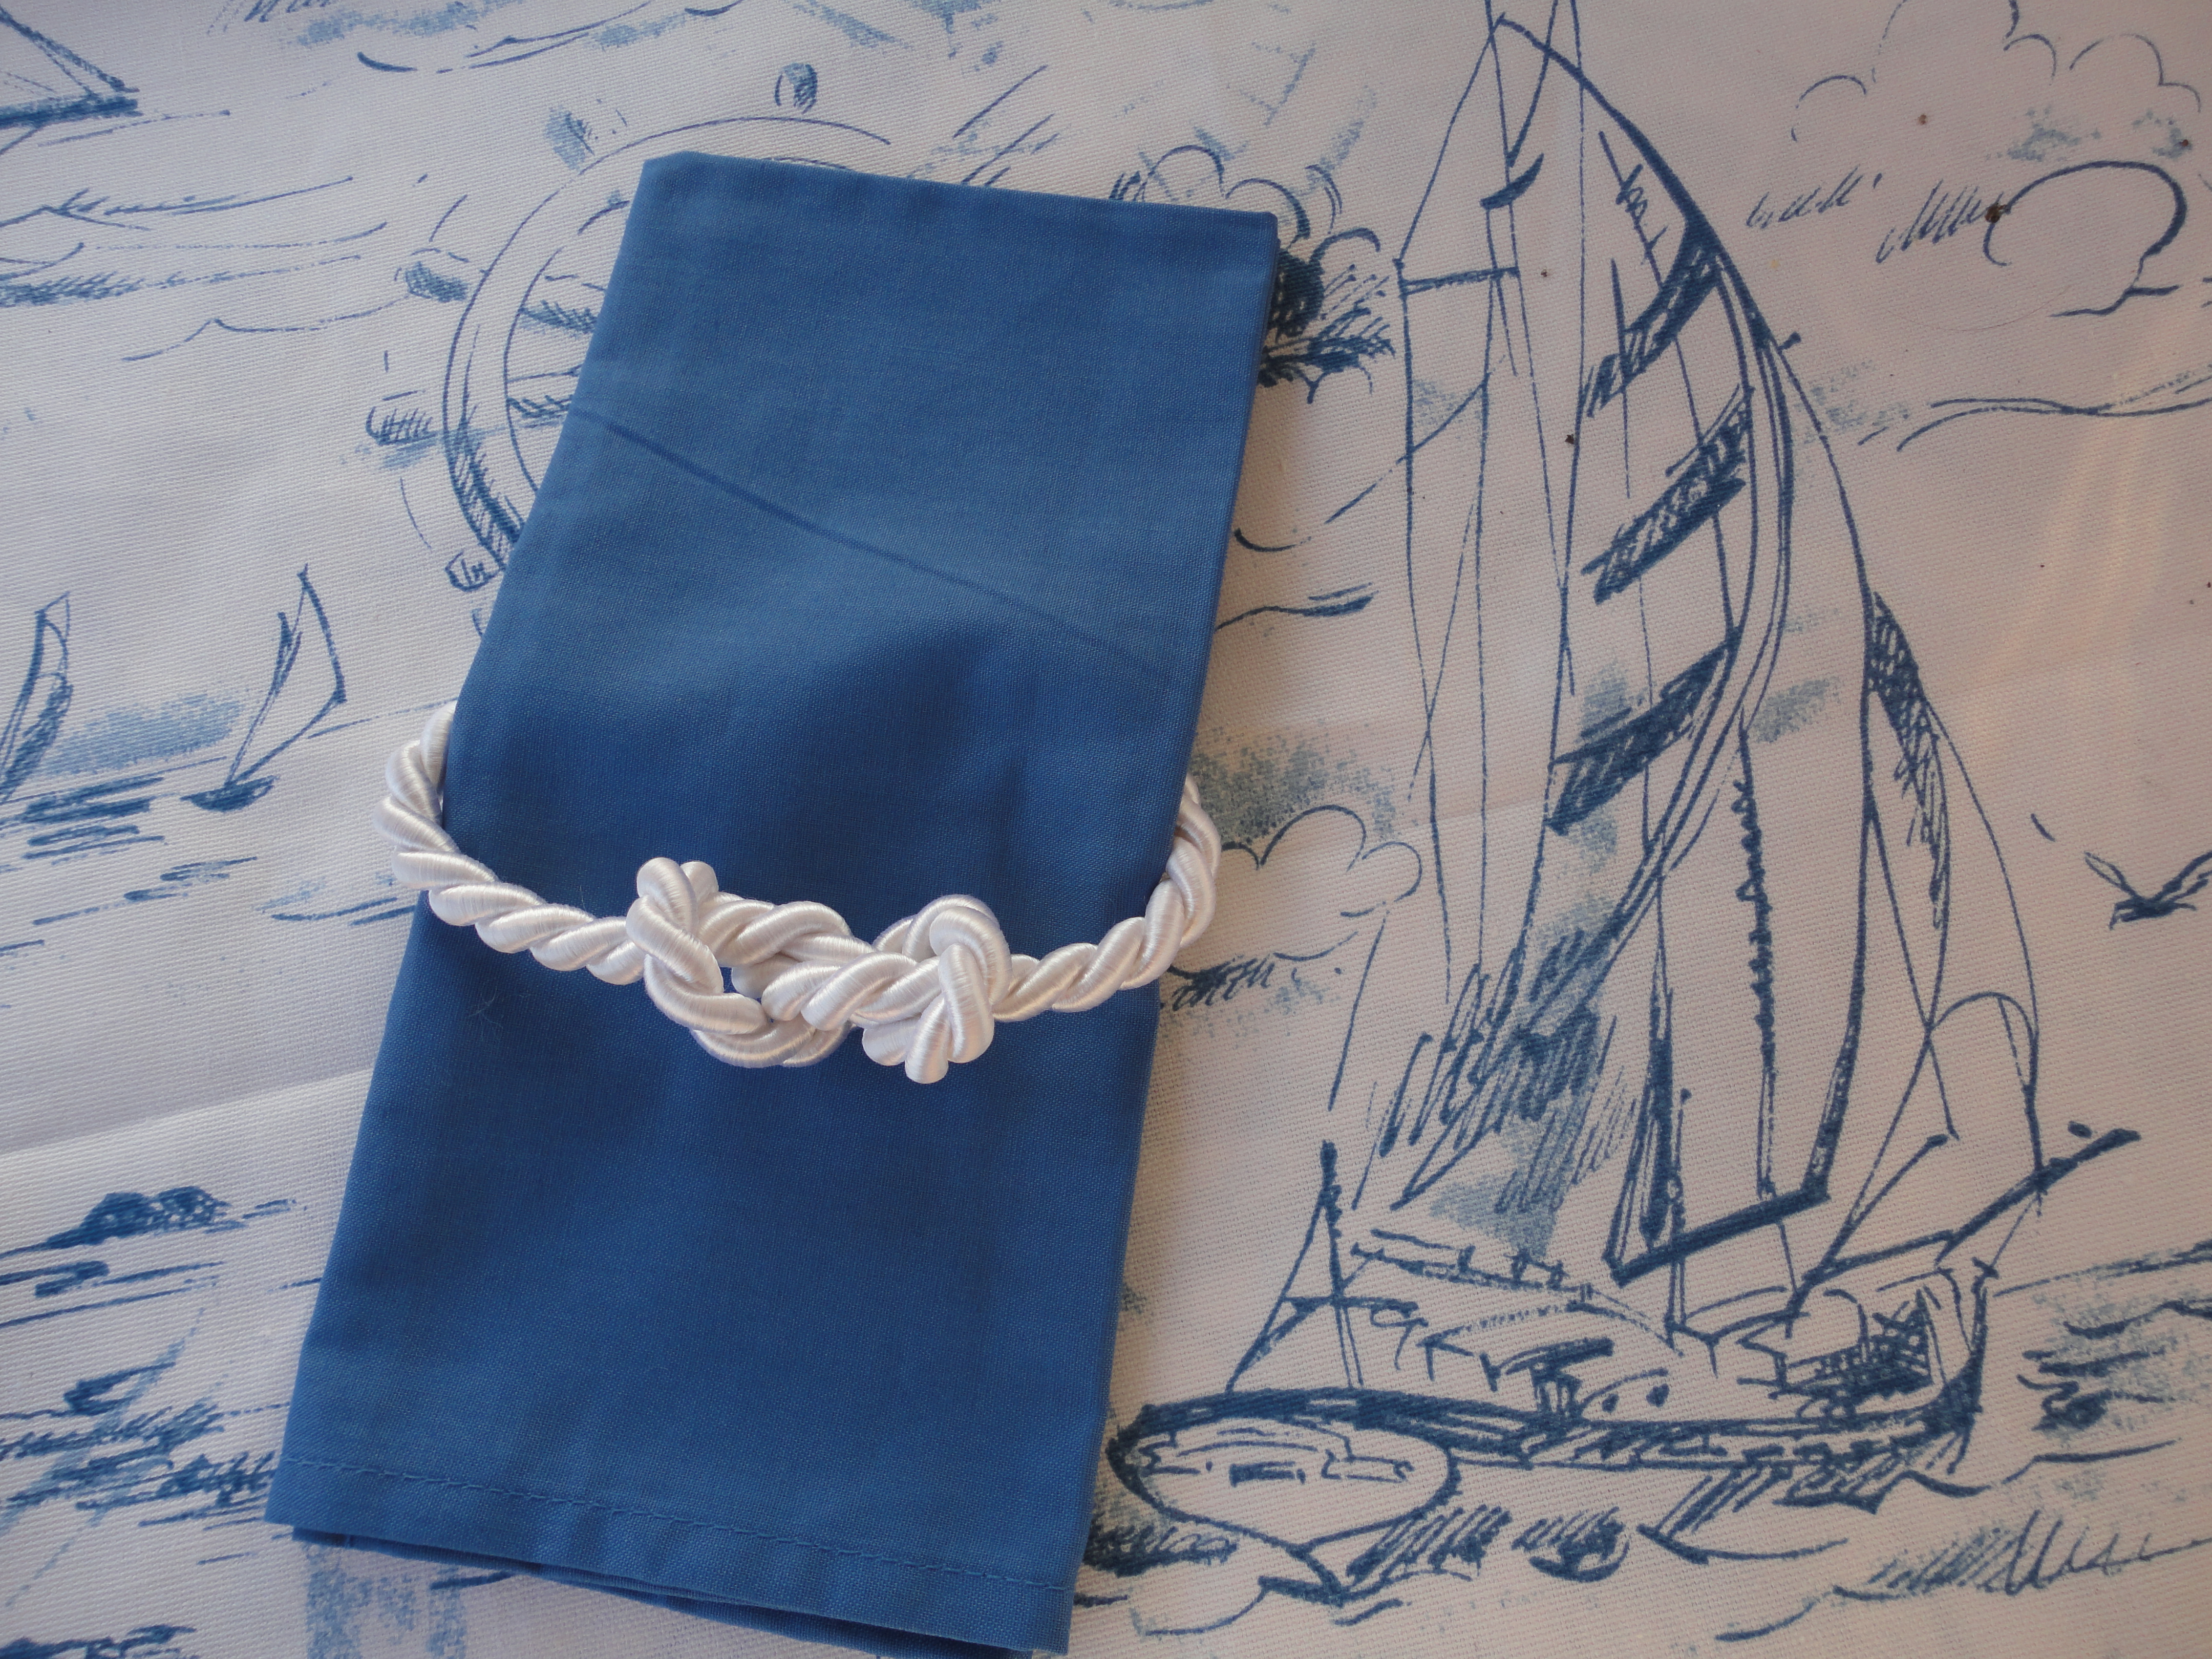 Nautical napkin ring.